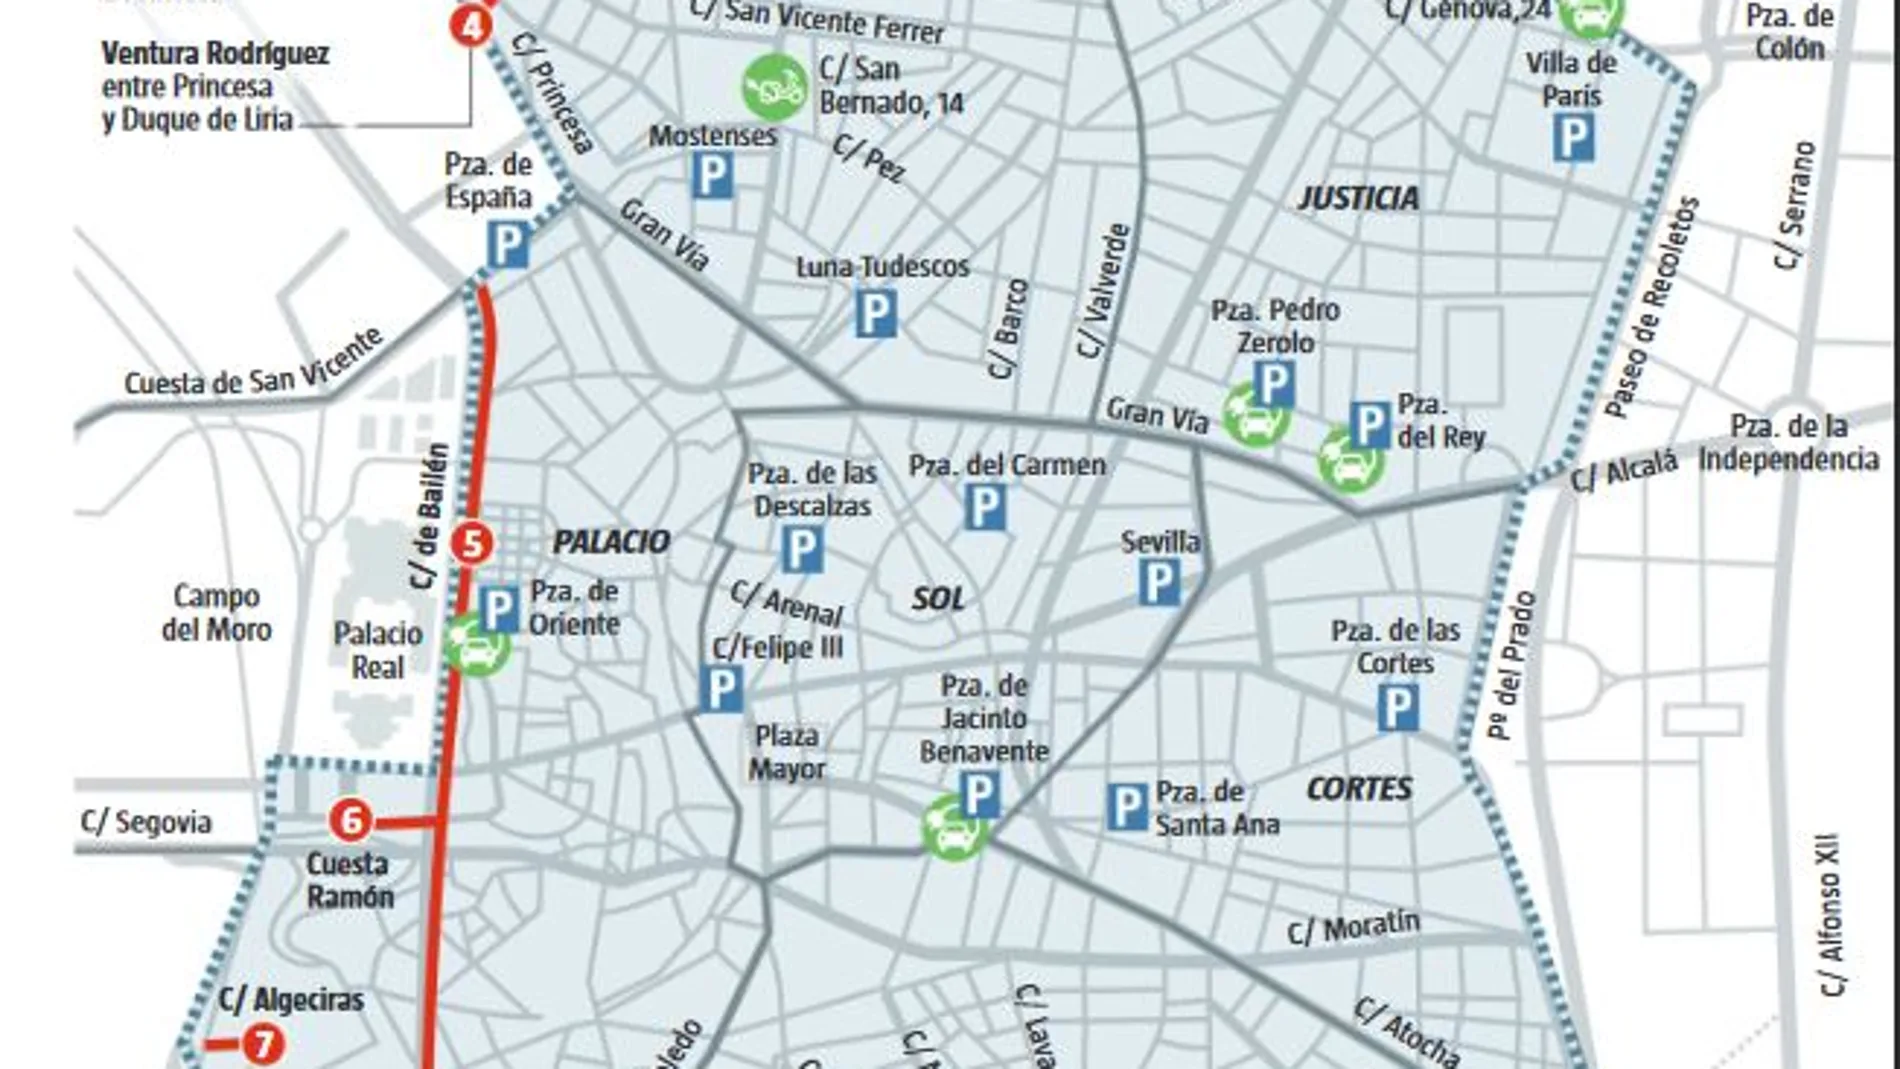 Mapa de Madrid Central